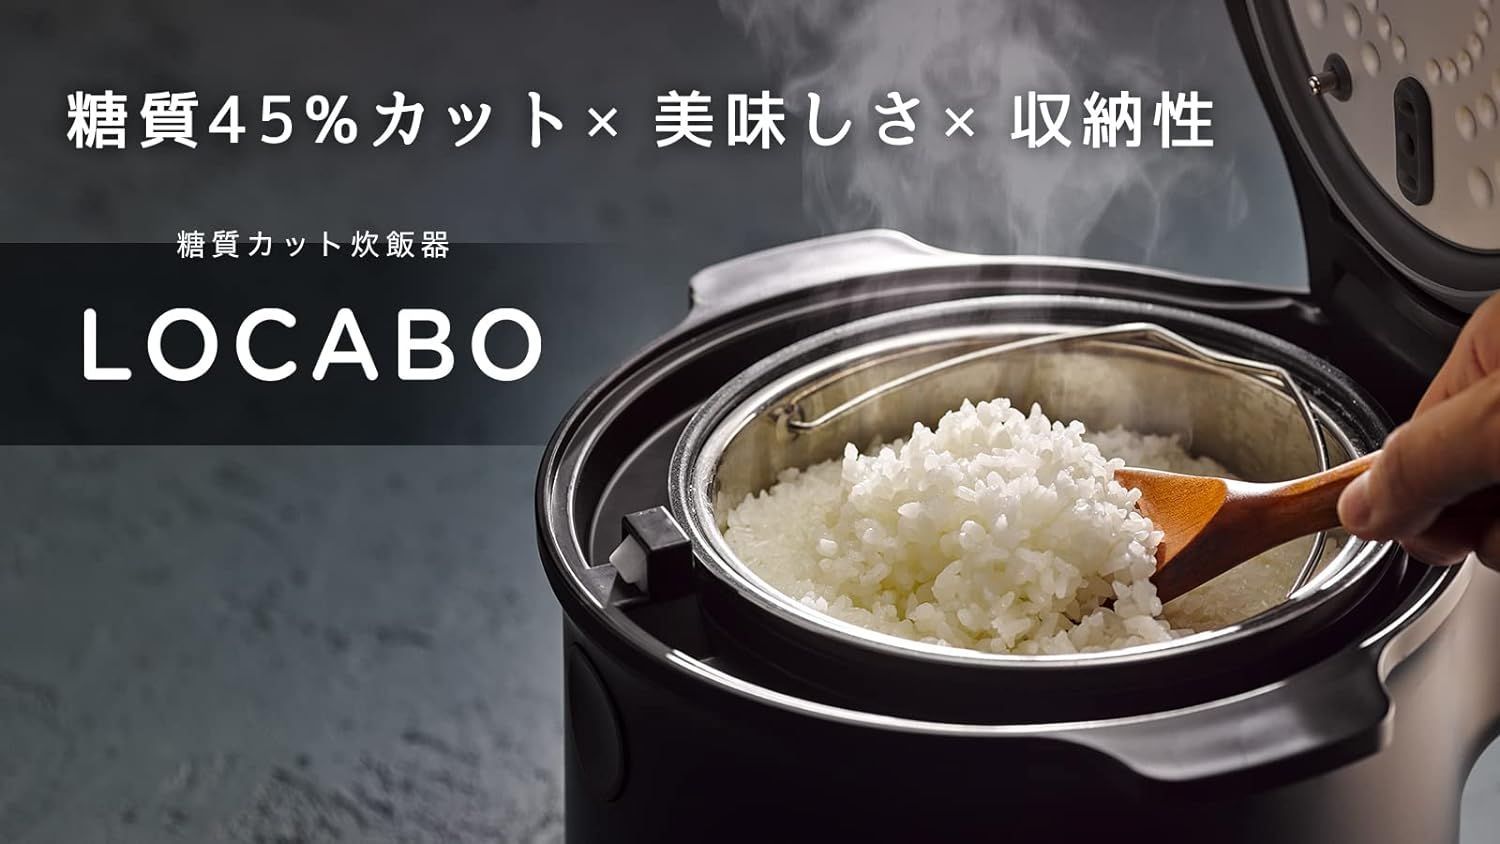 LOCABO：V ロカボ炊飯器「人気のブラック」最新モデル - キッチン家電